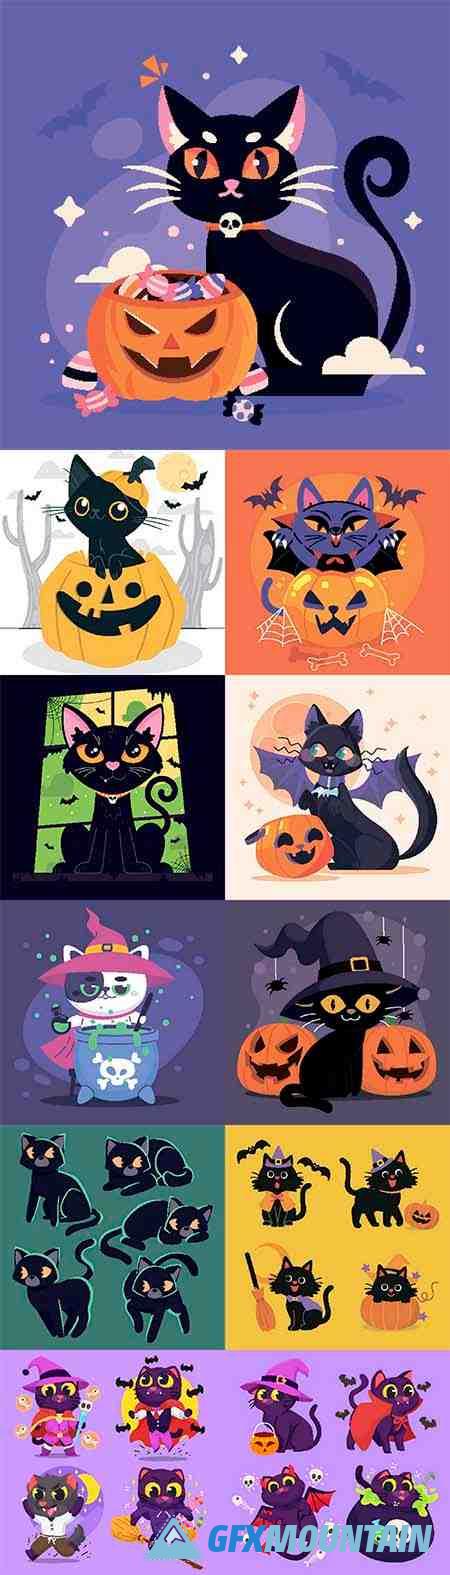 Hand-drawn flat halloween cats illustrations